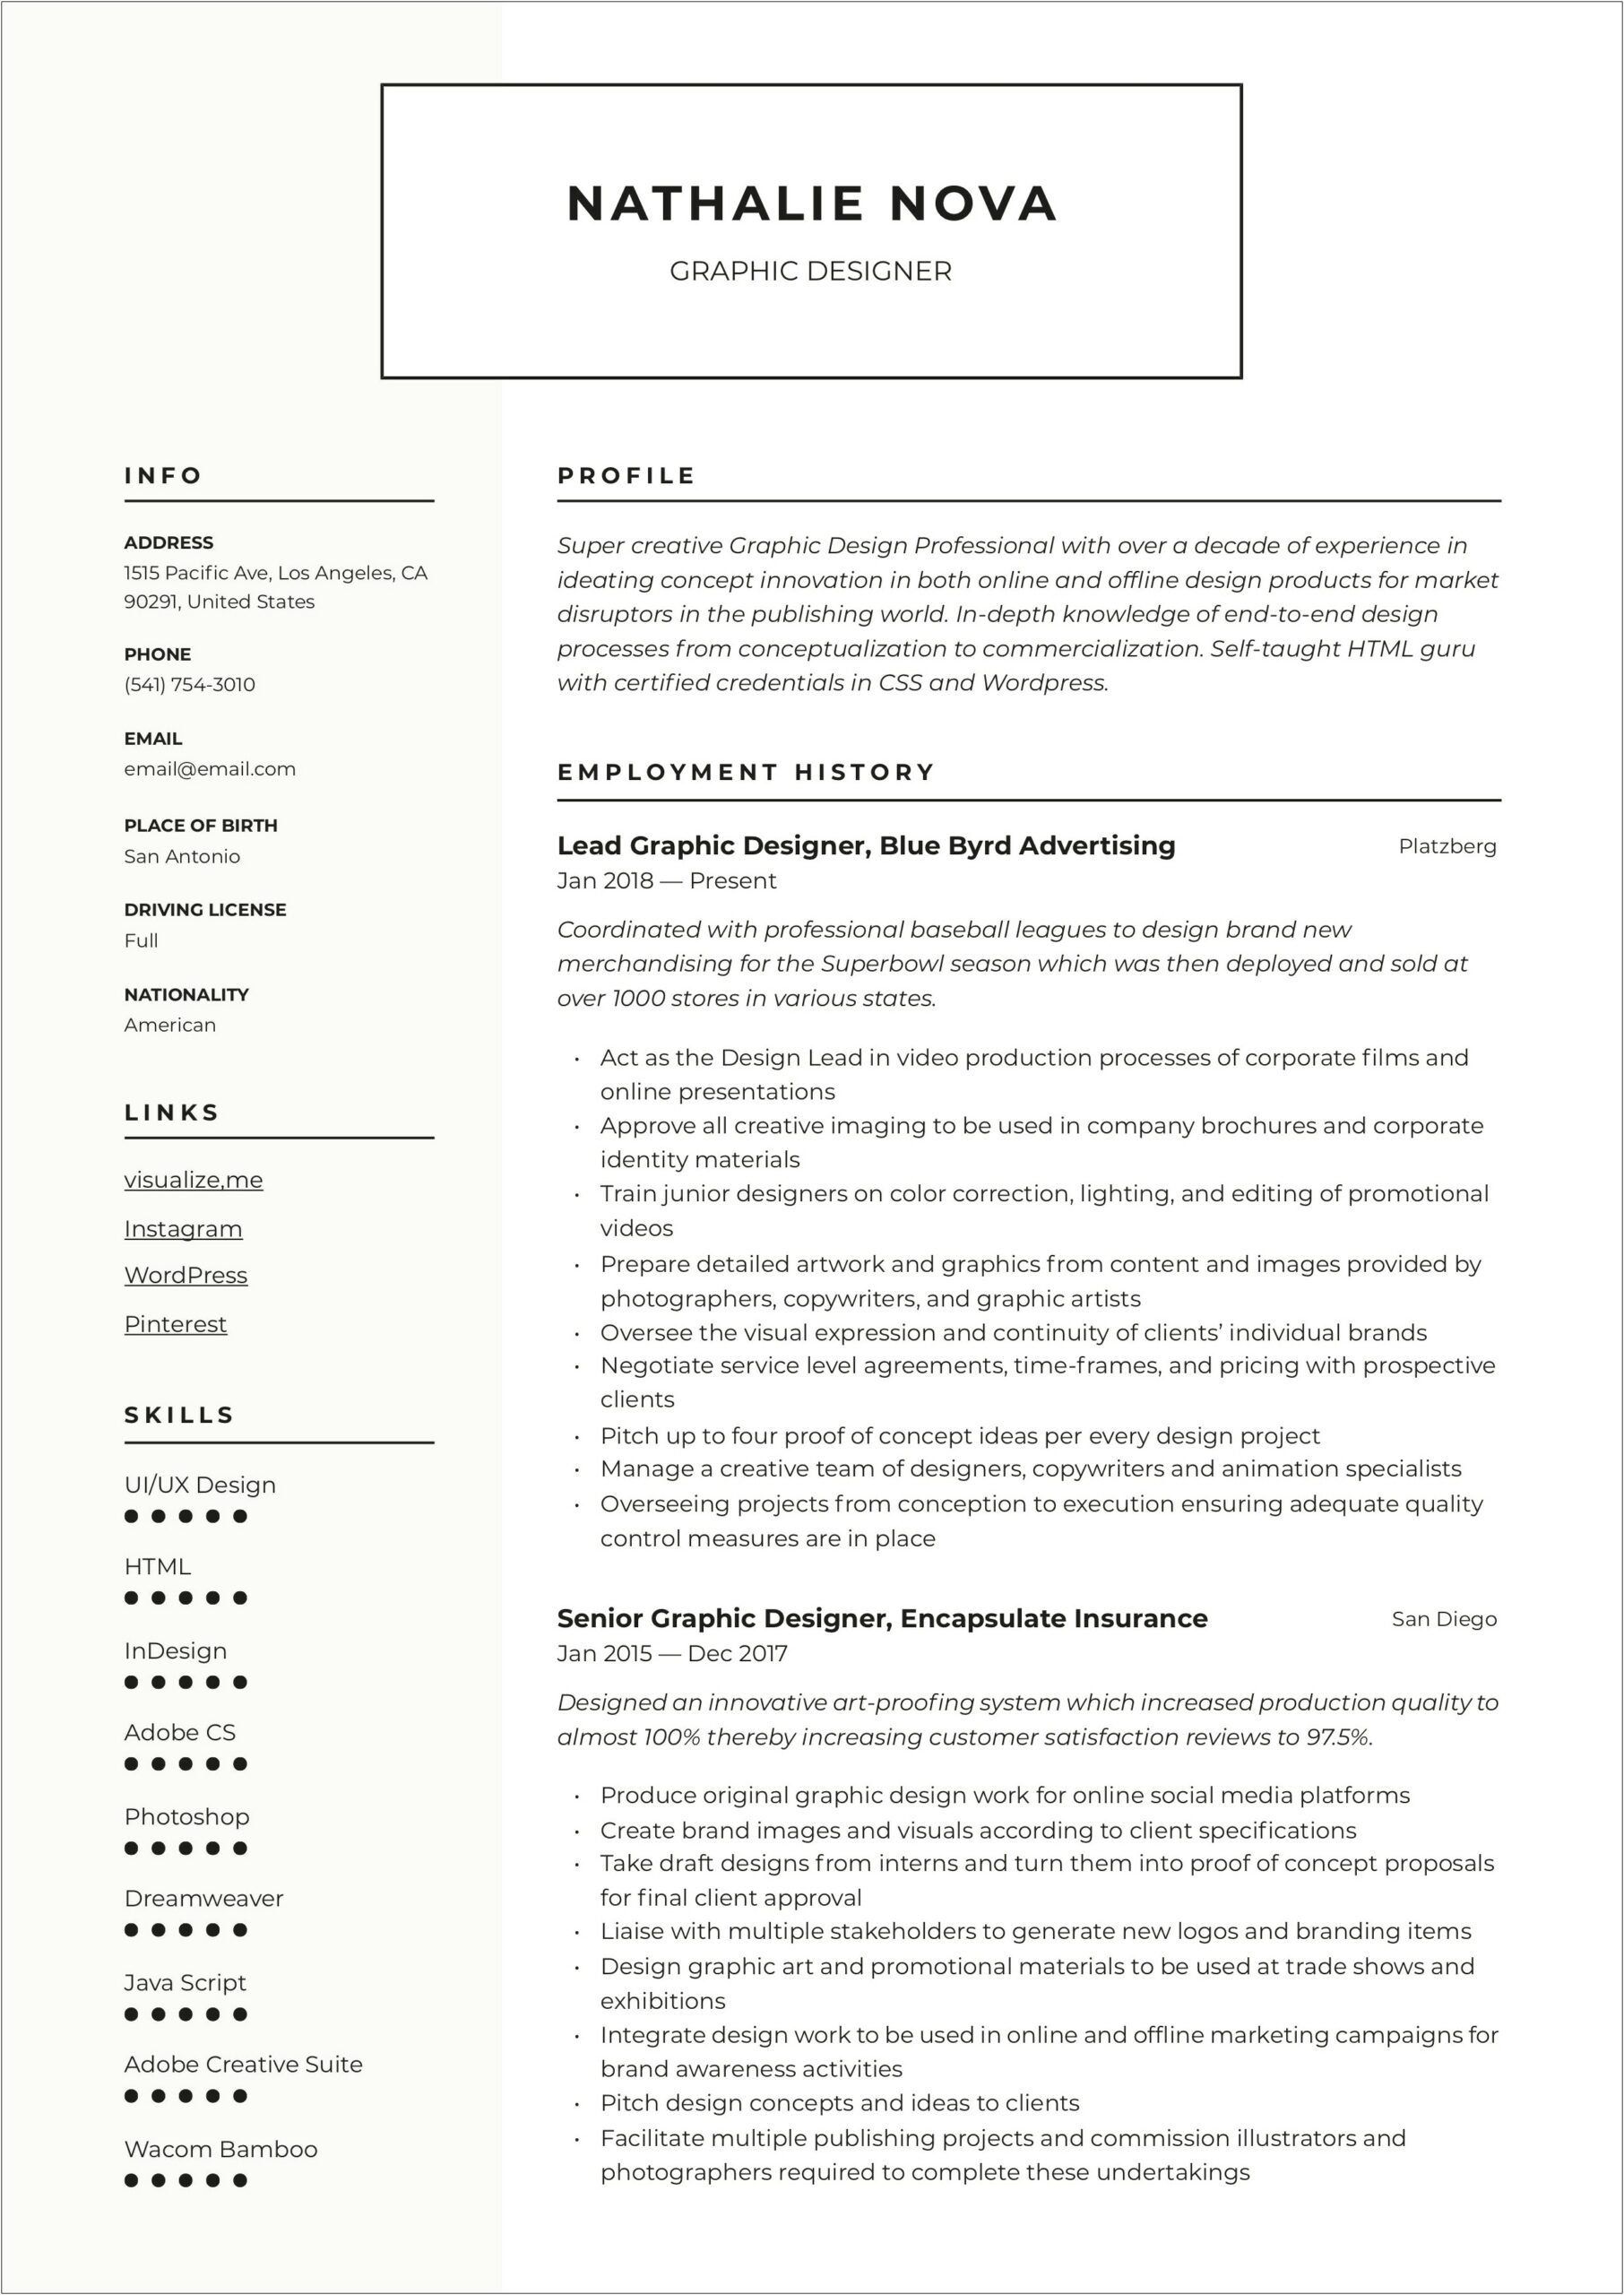 Graphic Designer Resume Format In Word